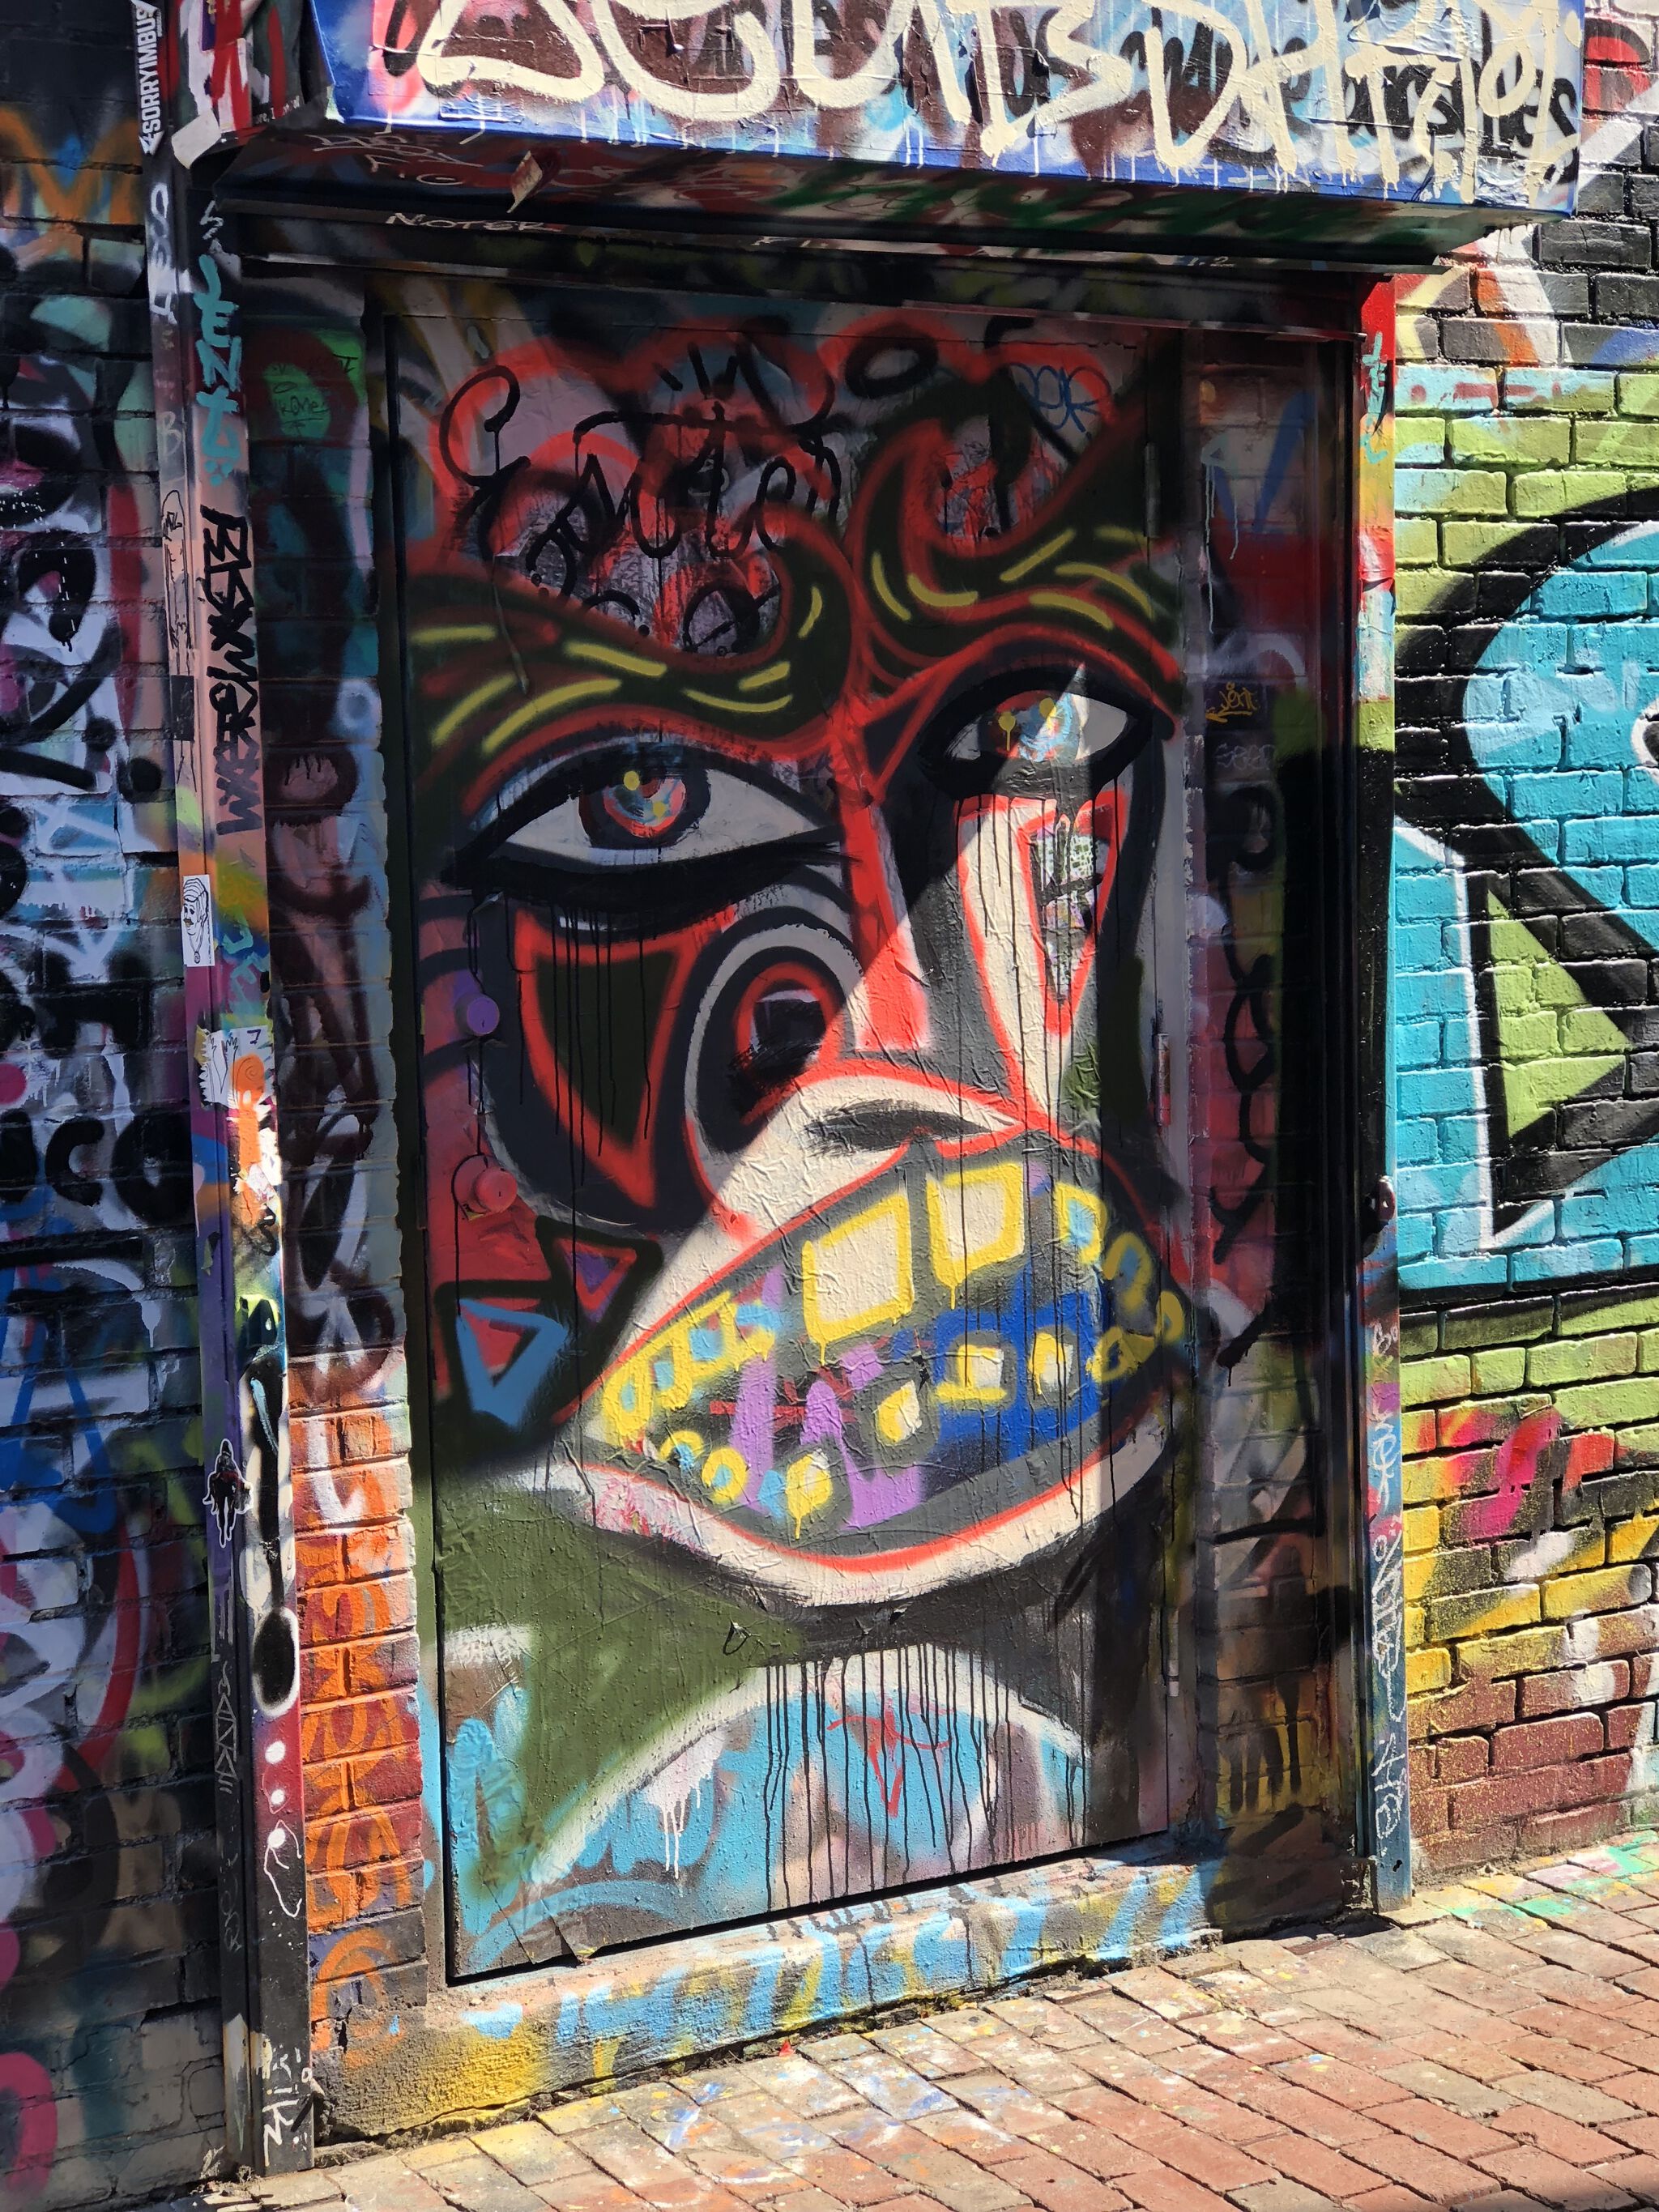 Local artists&mdash;Graffiti alley